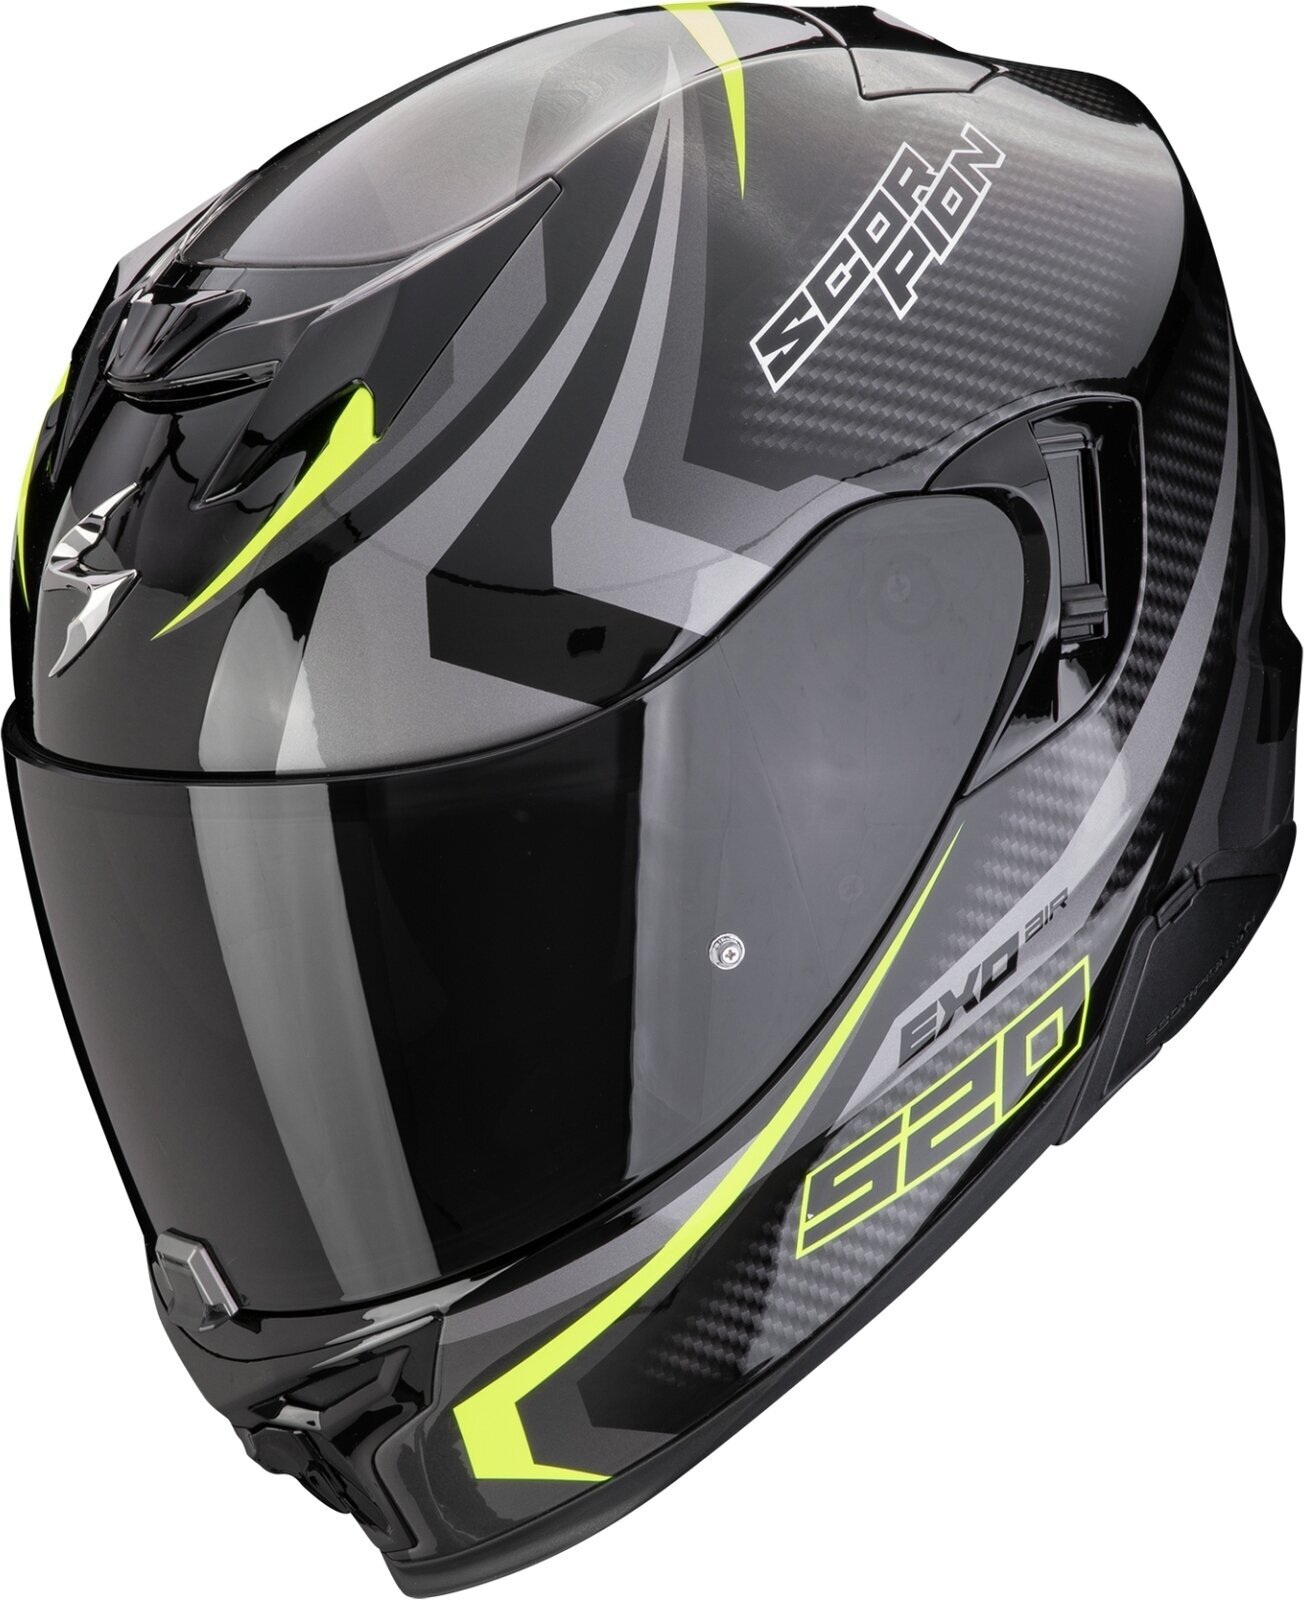 Helmet Scorpion EXO 520 EVO AIR TERRA Black/Silver/Neon Yellow S Helmet